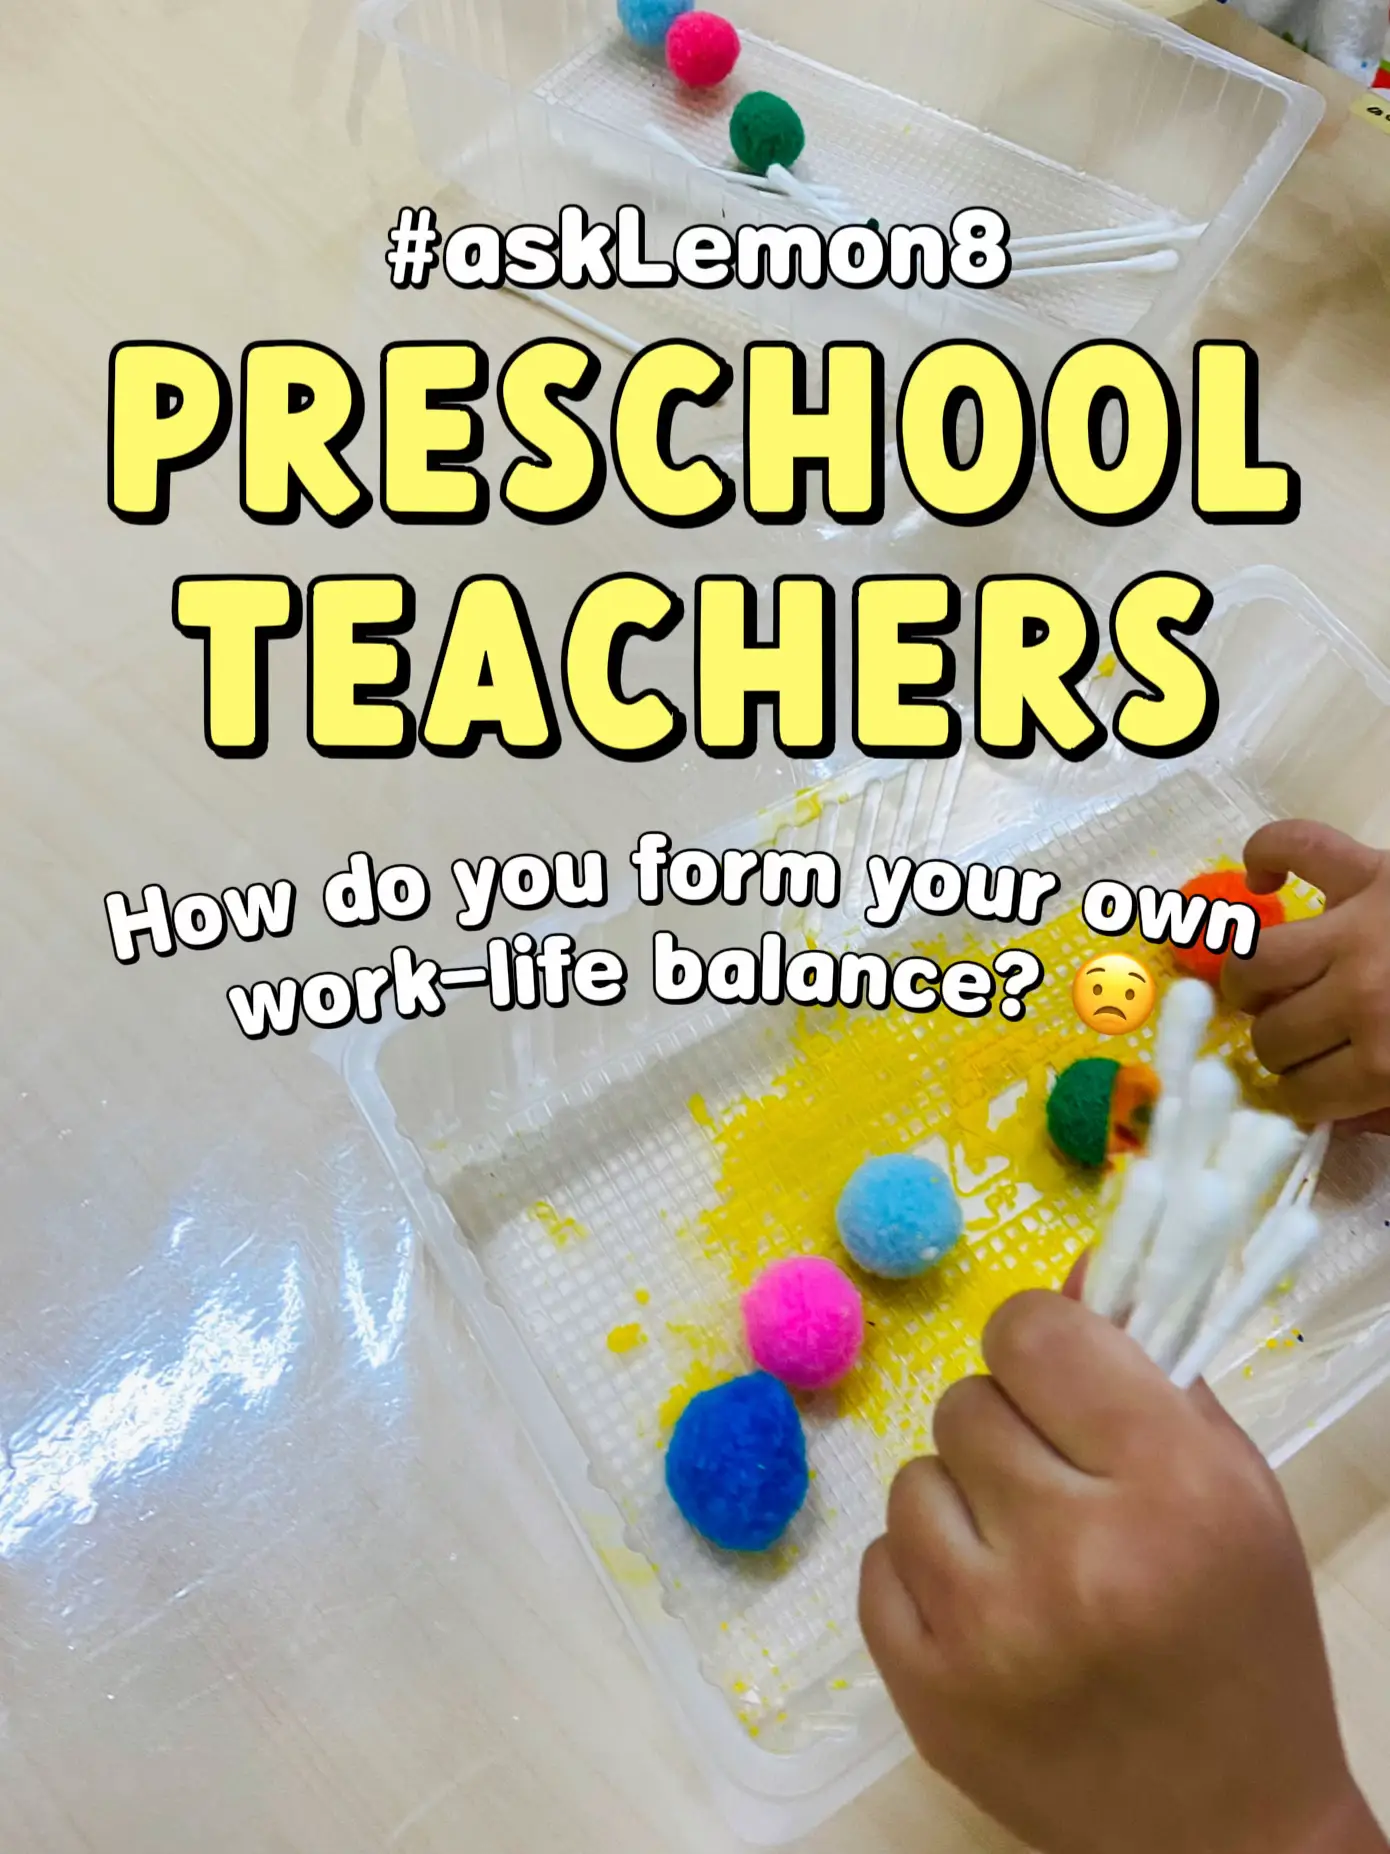 #askLemon8 Preschool Teachers!'s images(0)